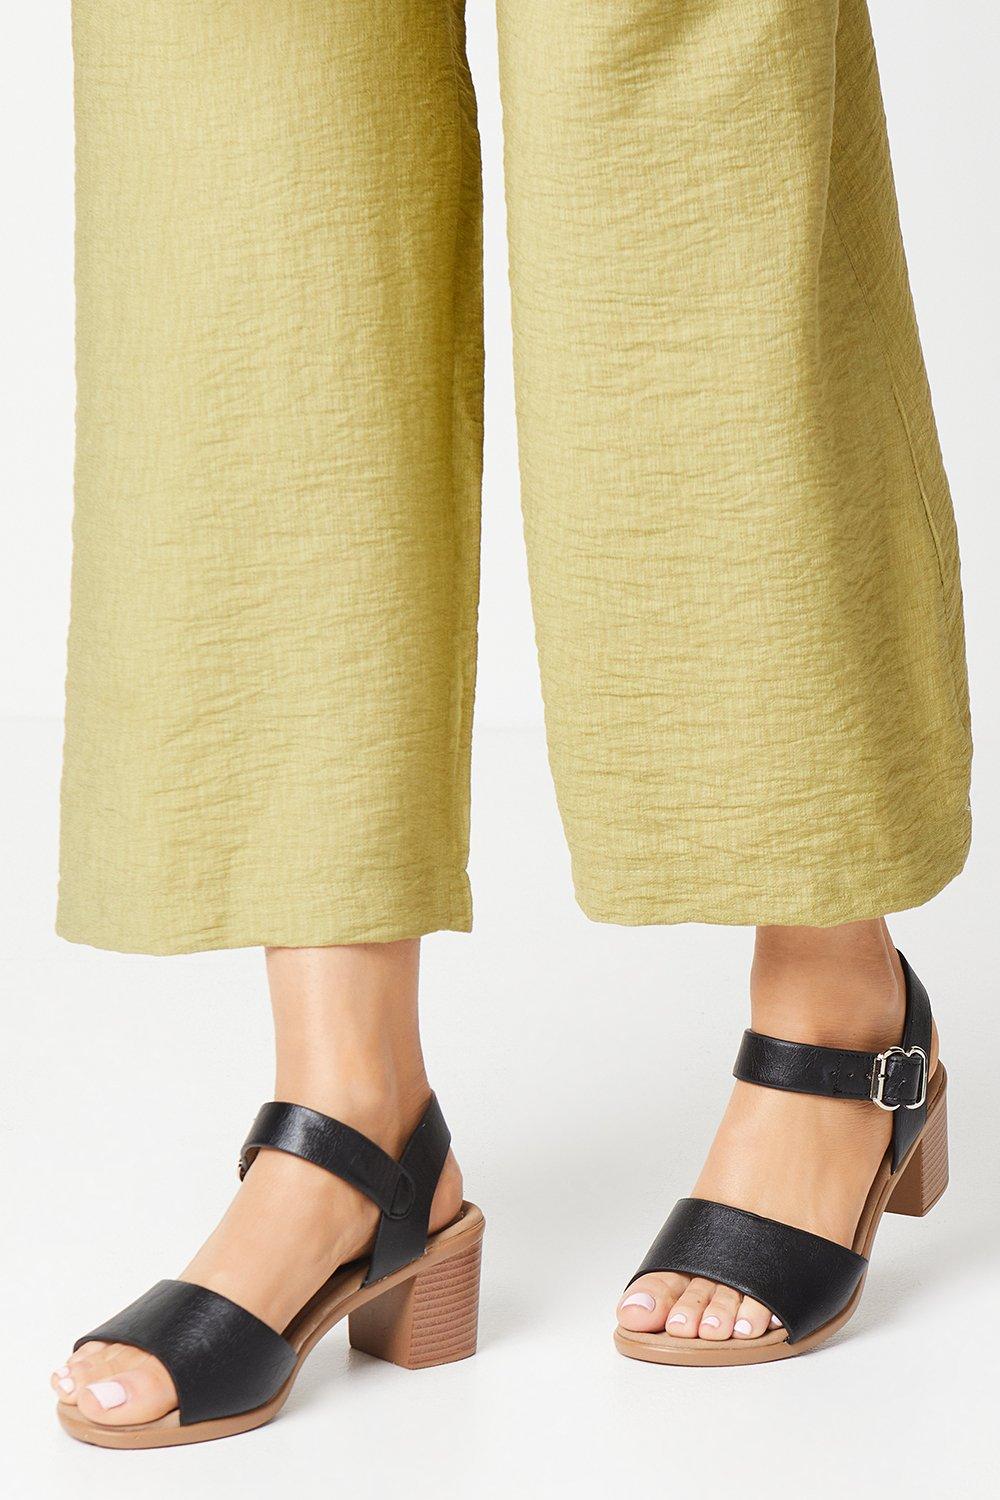 Womens Good For The Sole: Eloise Comfort Lightweight Medium Block Heel Sandals